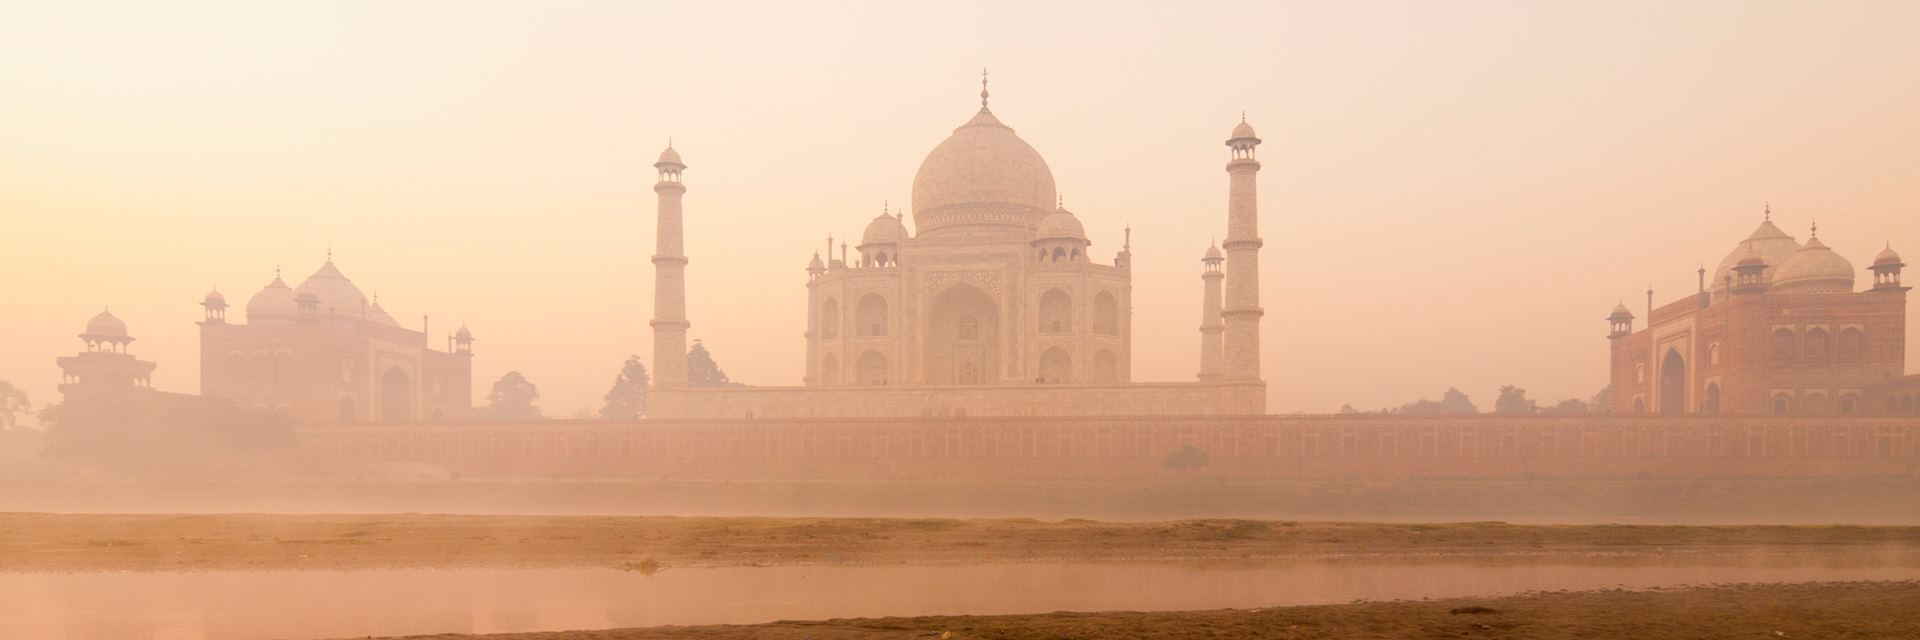 Taj Mahal at sunrise